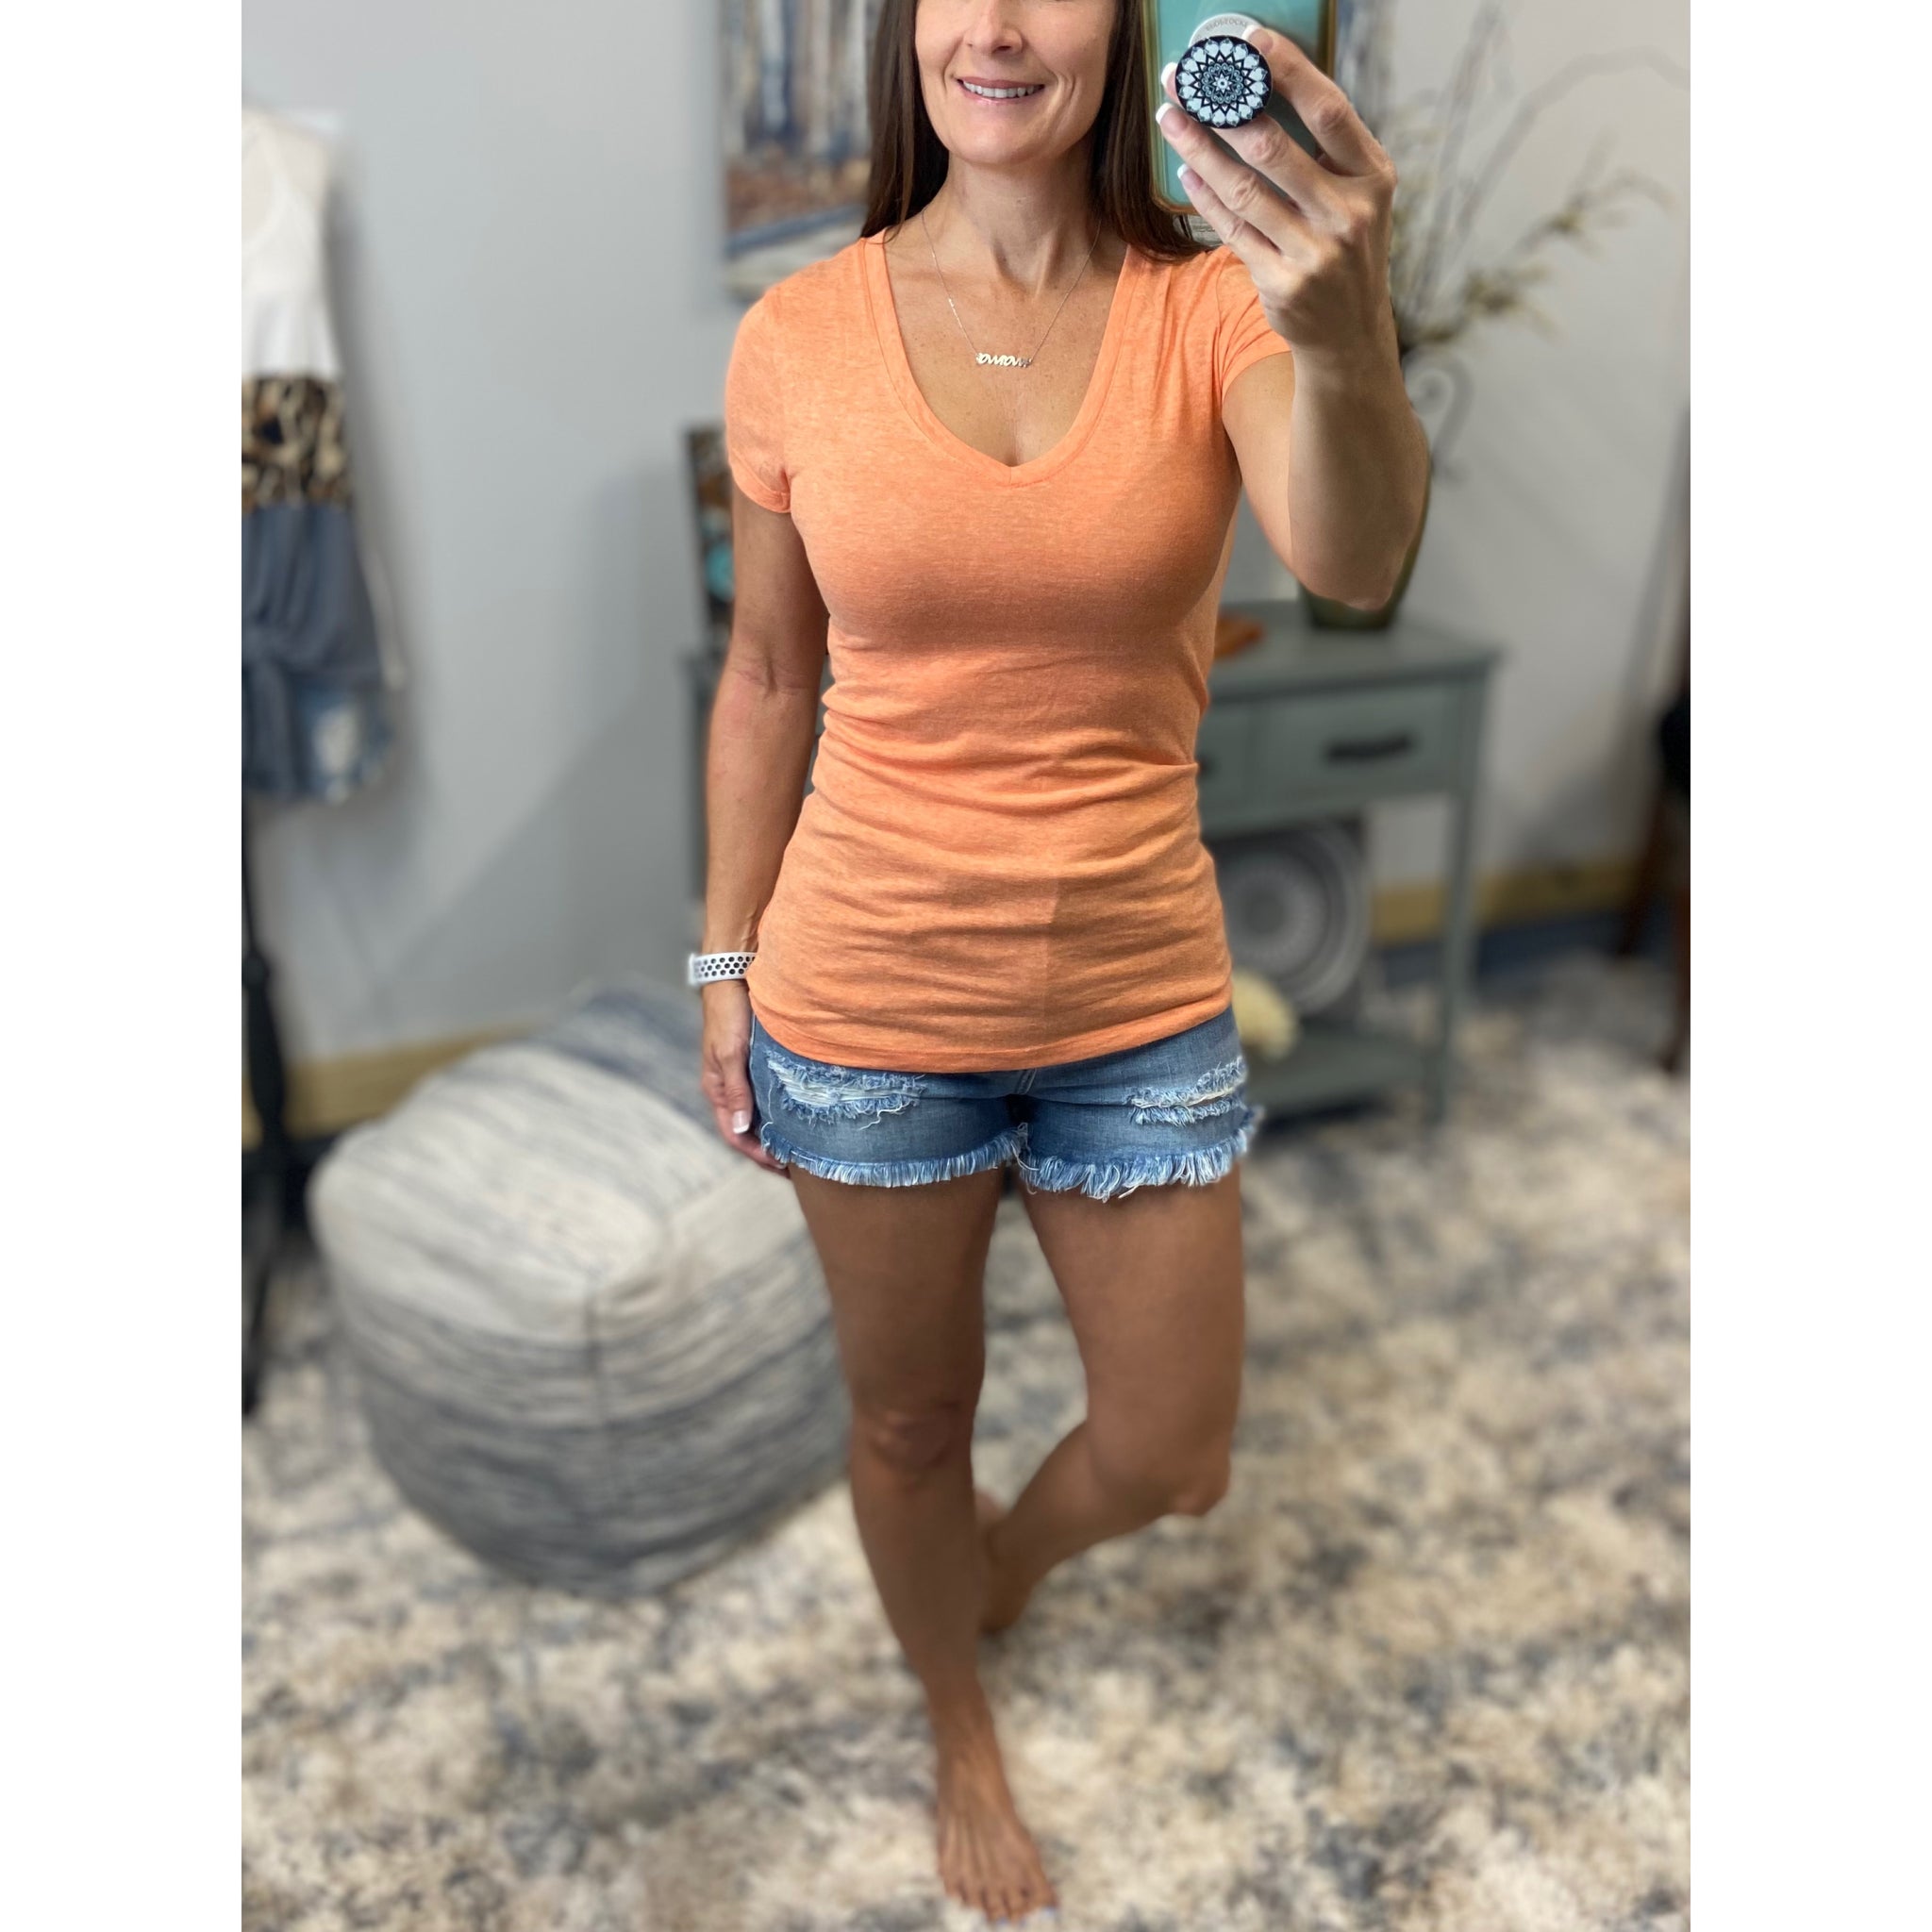 Low Cut V-Neck Melange Baby Slimming Short Sleeve Basic Tee Shirt Orange